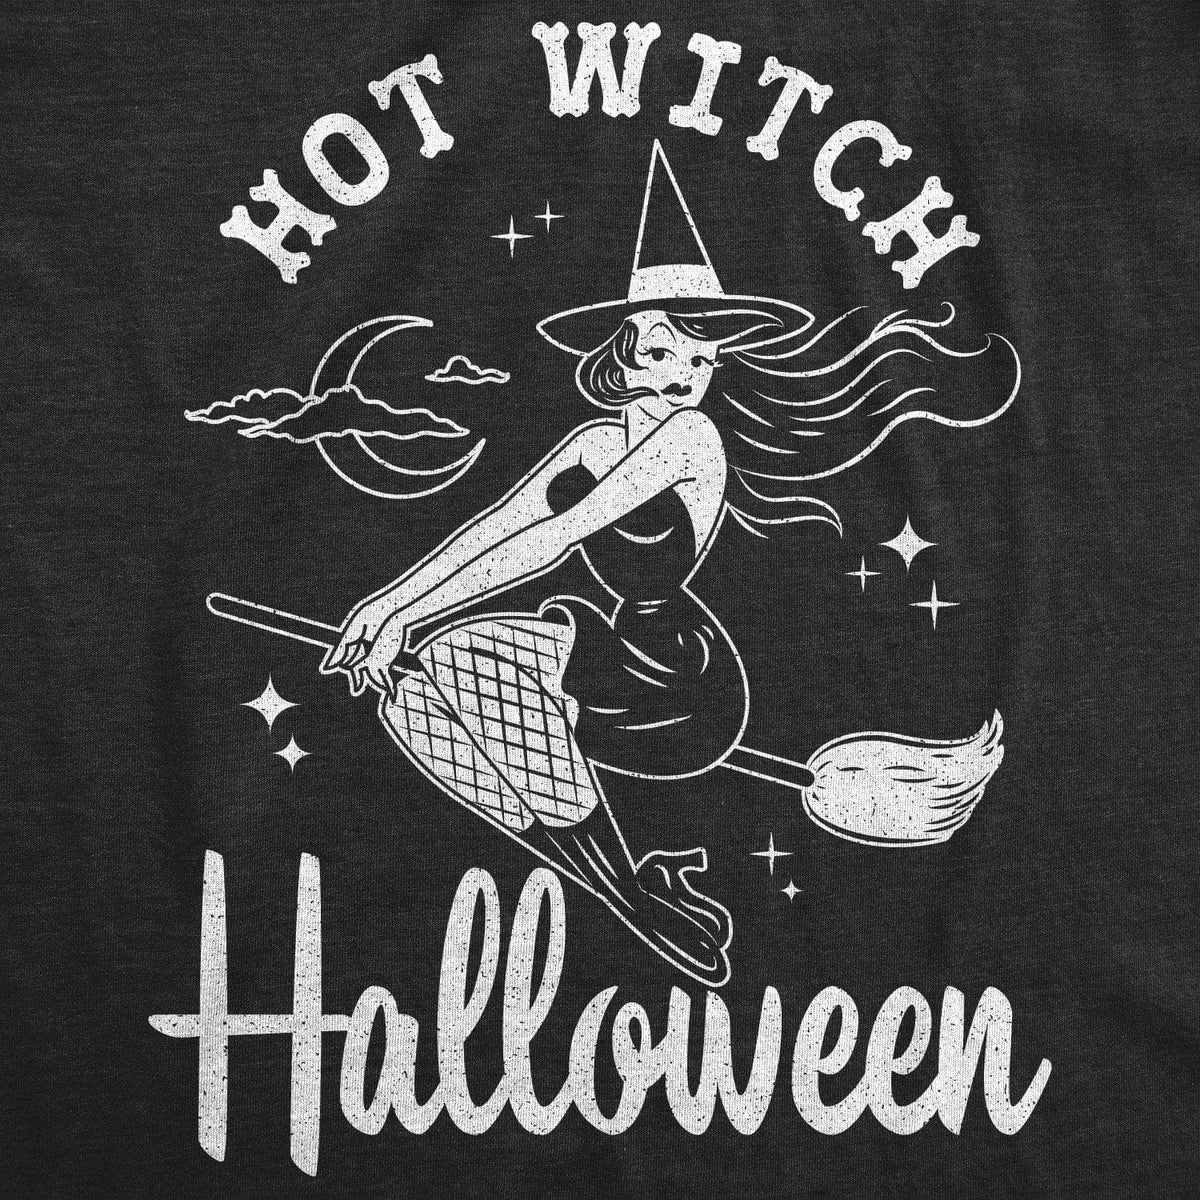 Hot Witch Halloween Women&#39;s Tshirt - Crazy Dog T-Shirts